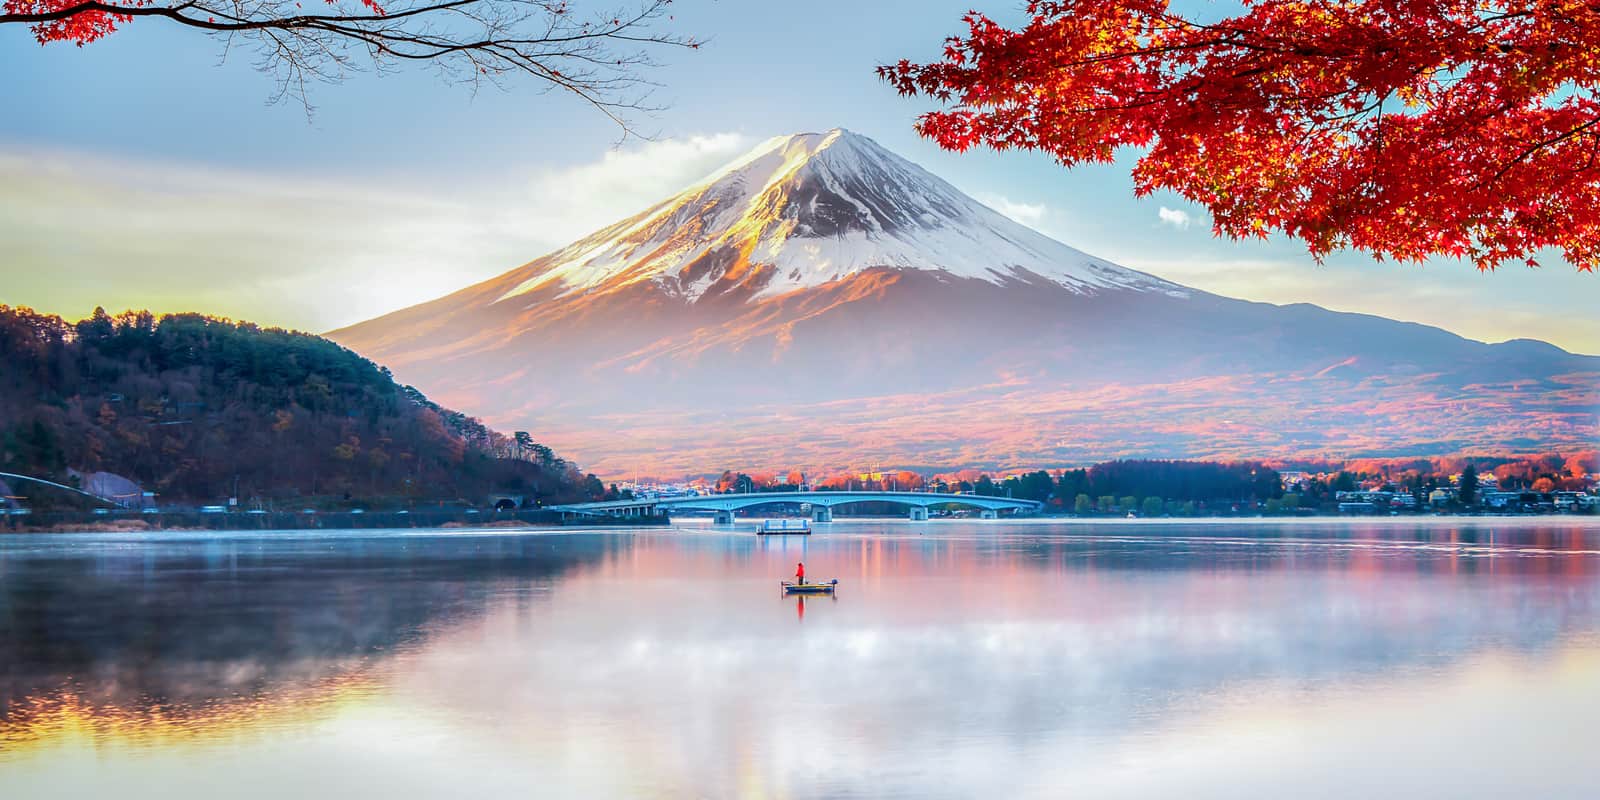 Japan Through the Seasons